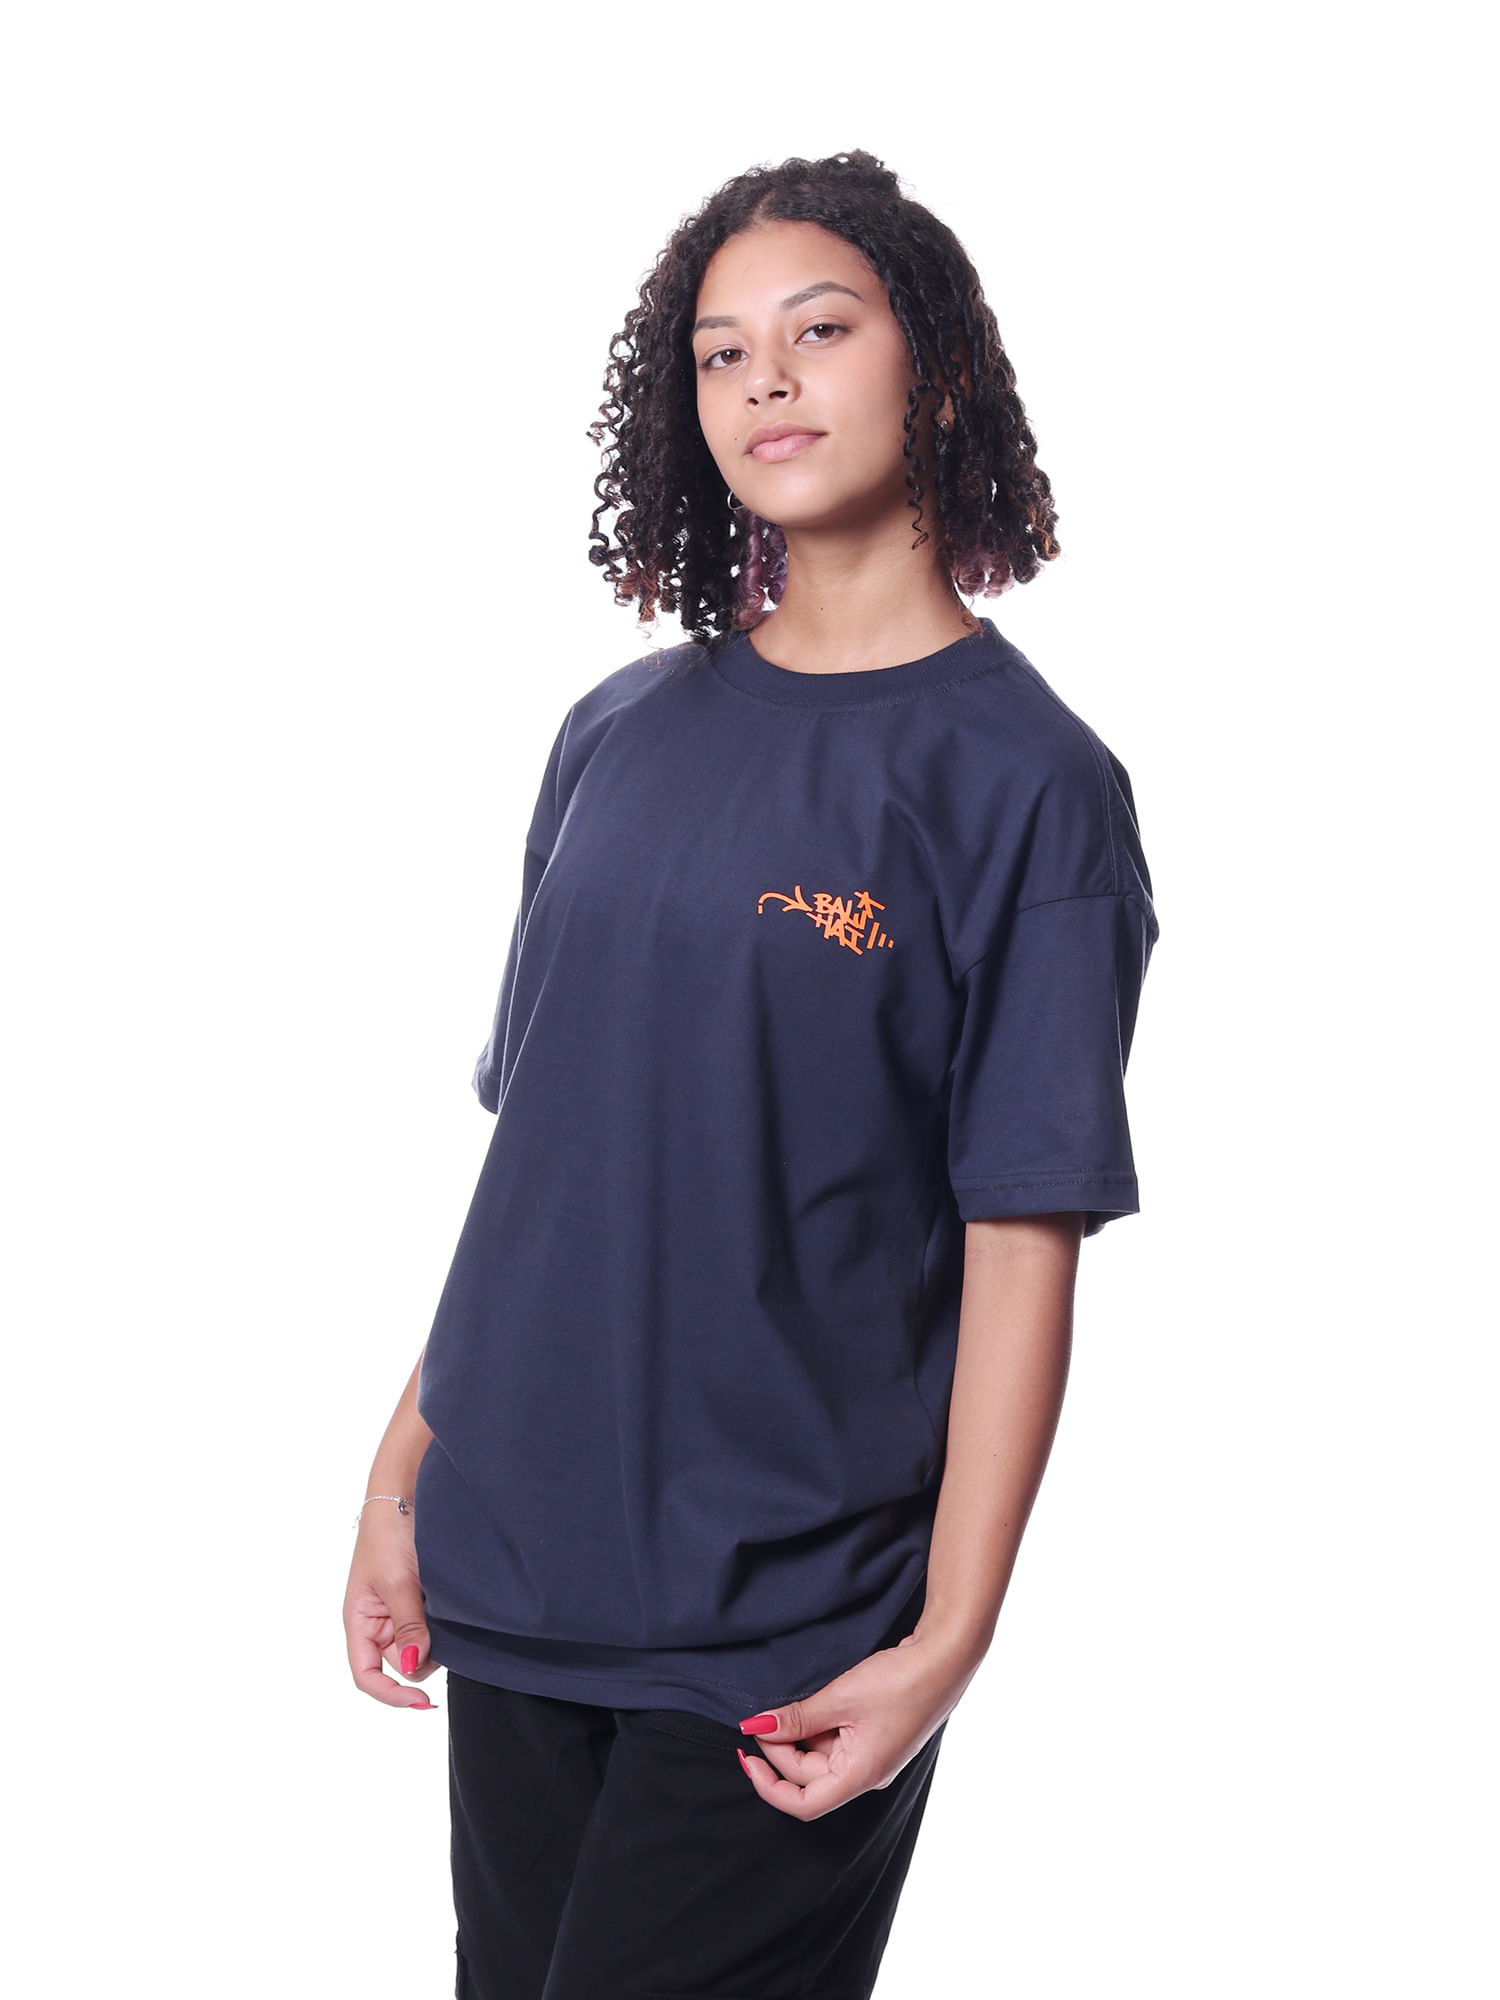 Camiseta-bali-hai-classica-Marinho-laranja